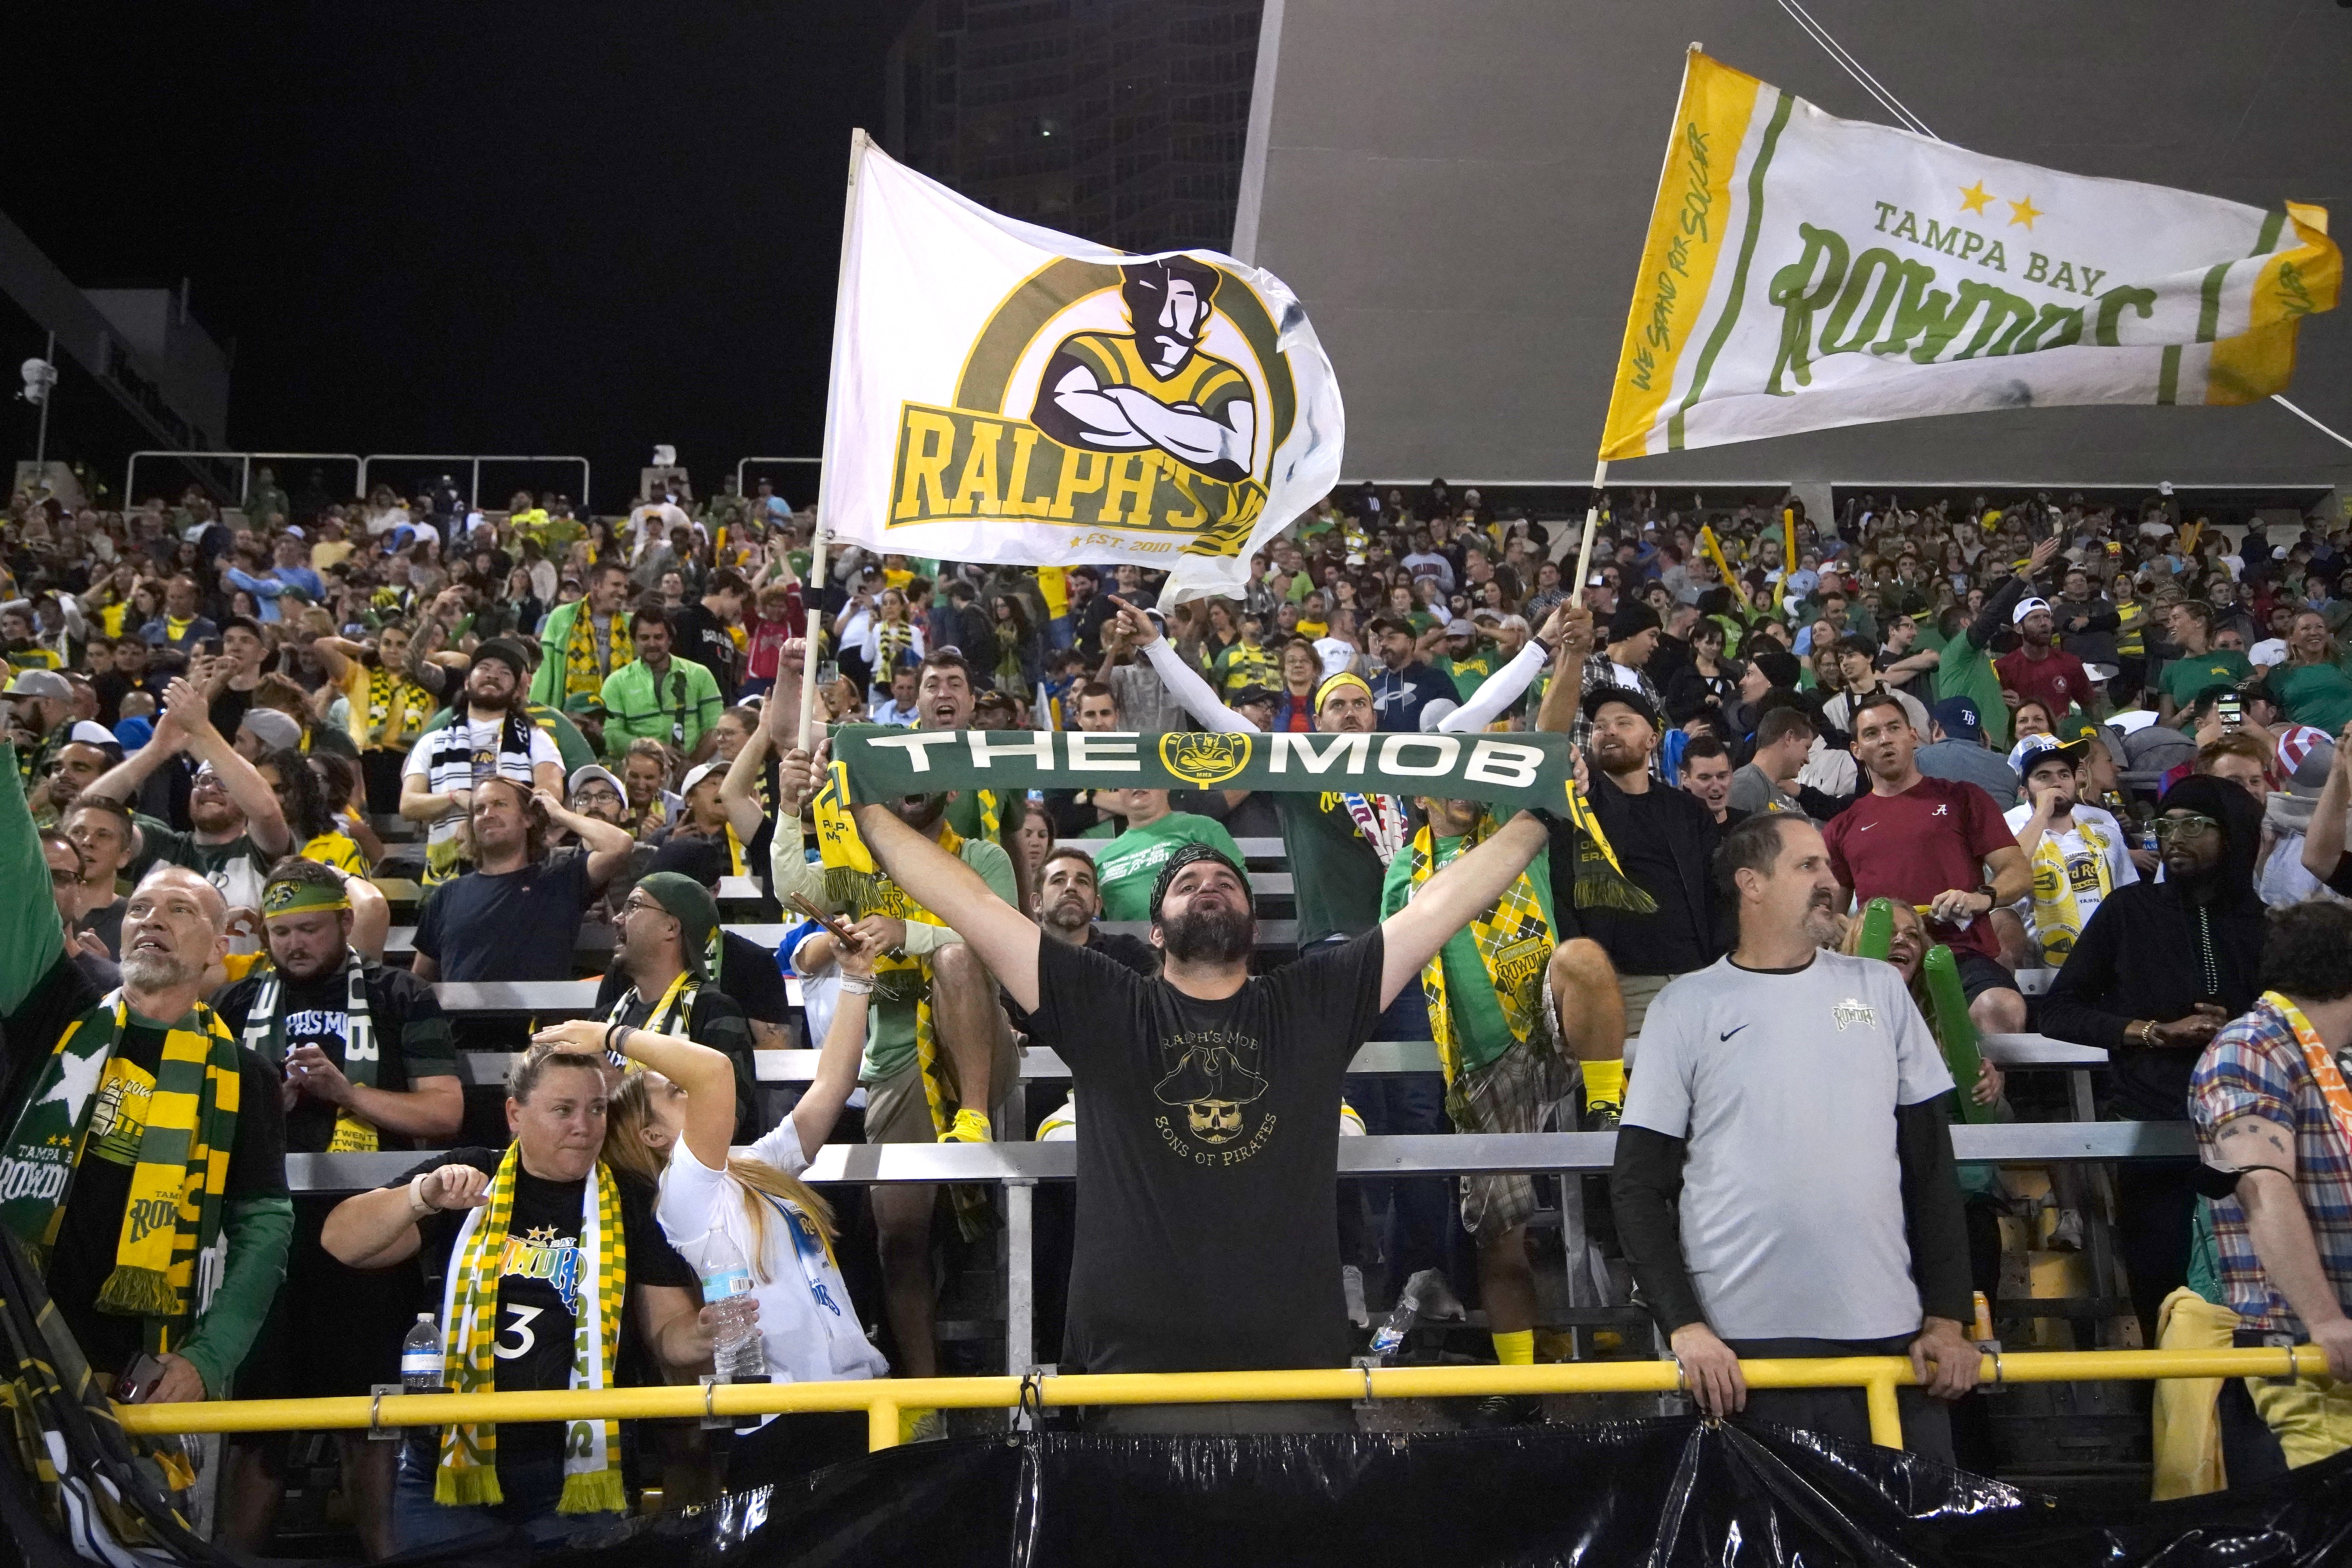 Tampa Bay Rowdies unveil details for potential MLS stadium